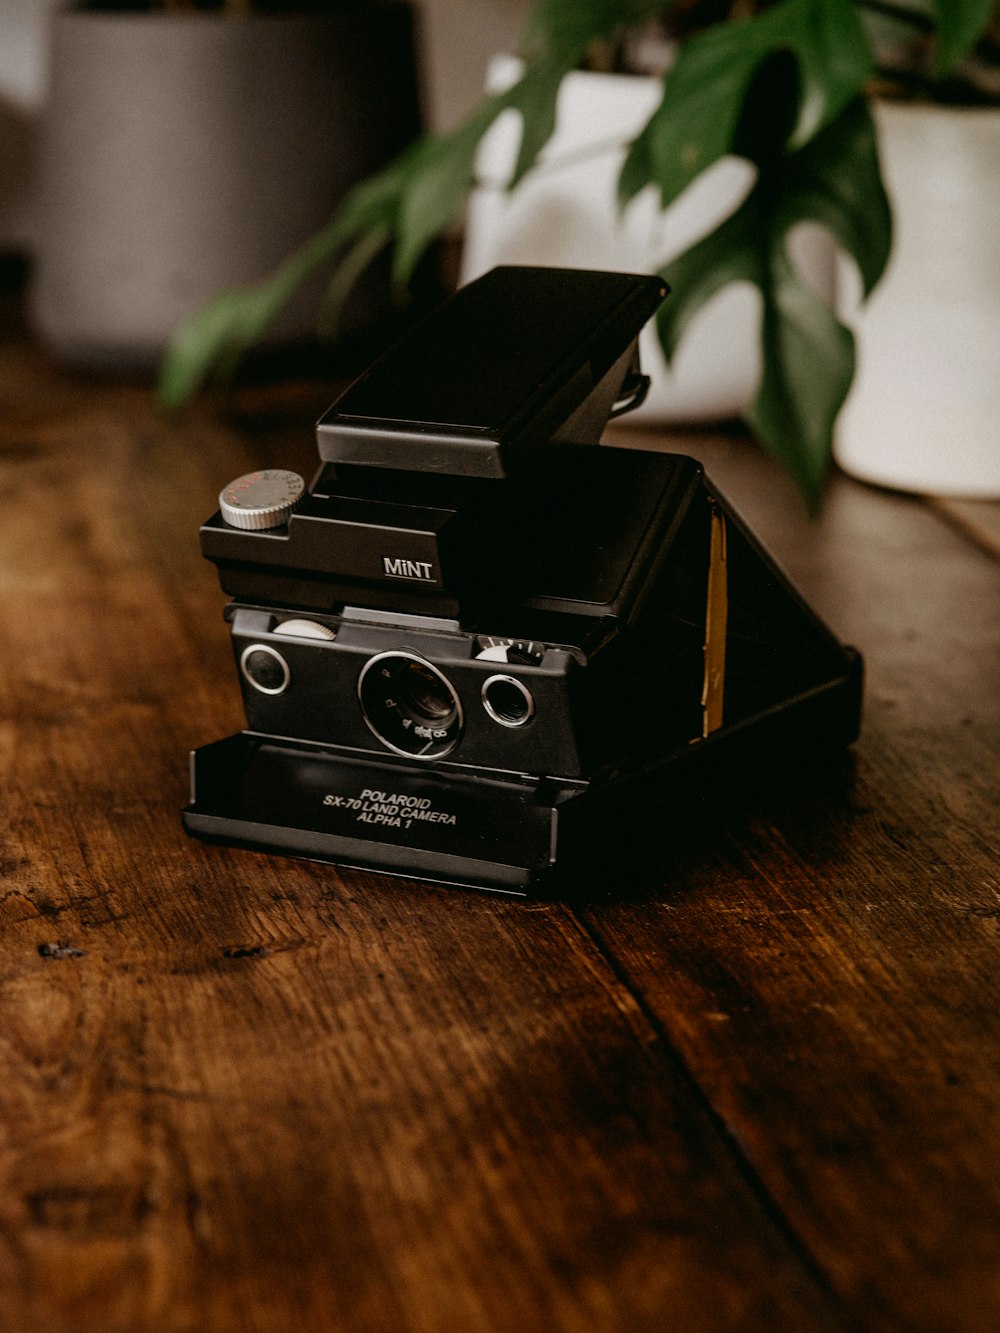 Appareil photo polaroid noir sur table en bois marron